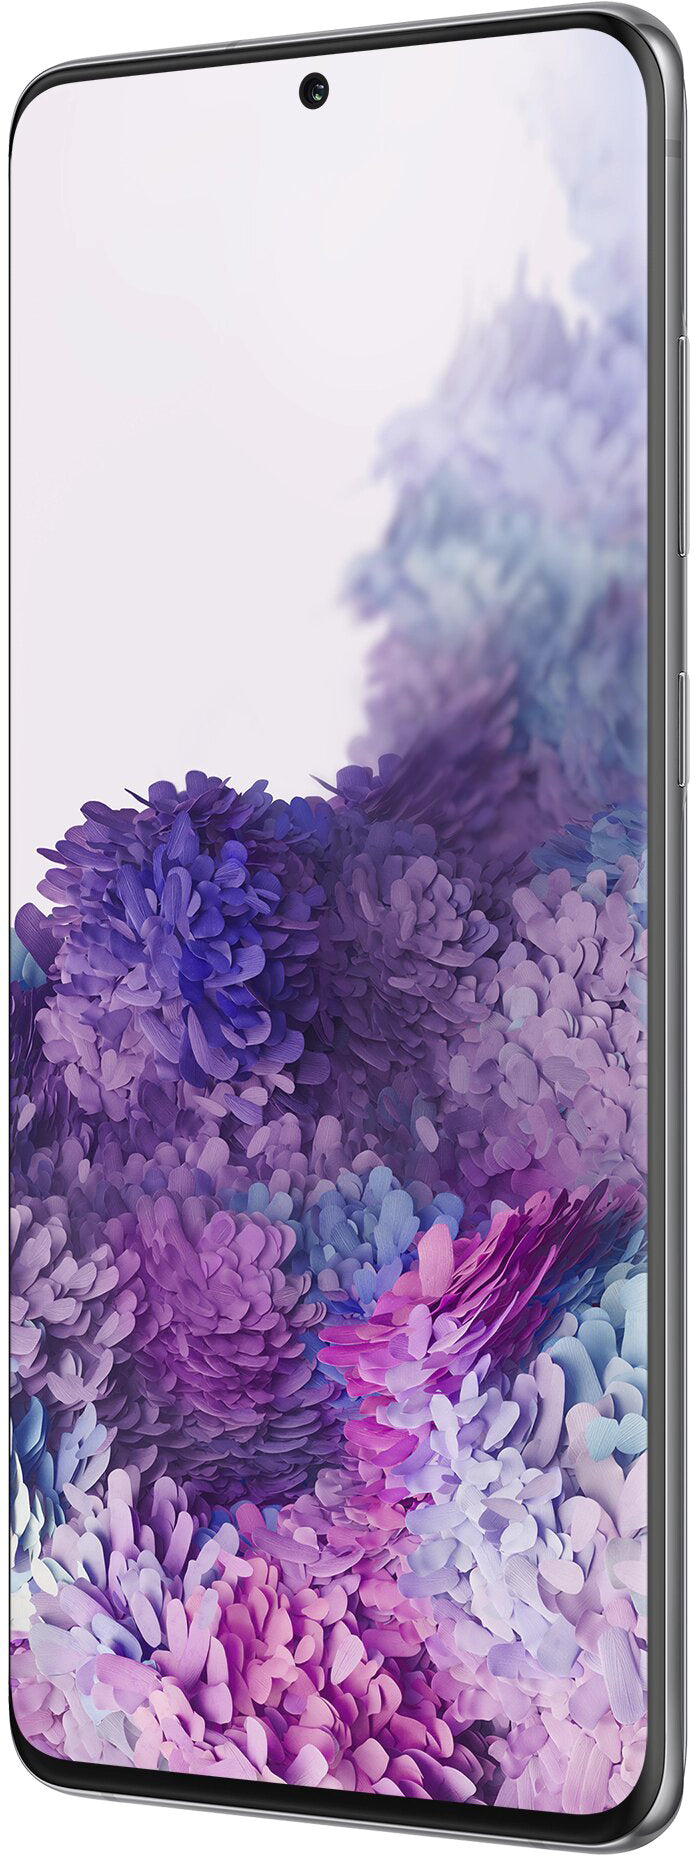 Samsung Galaxy S20+ 5G Single SIM + eSIM 12GB + 512GB - Cosmic Grey